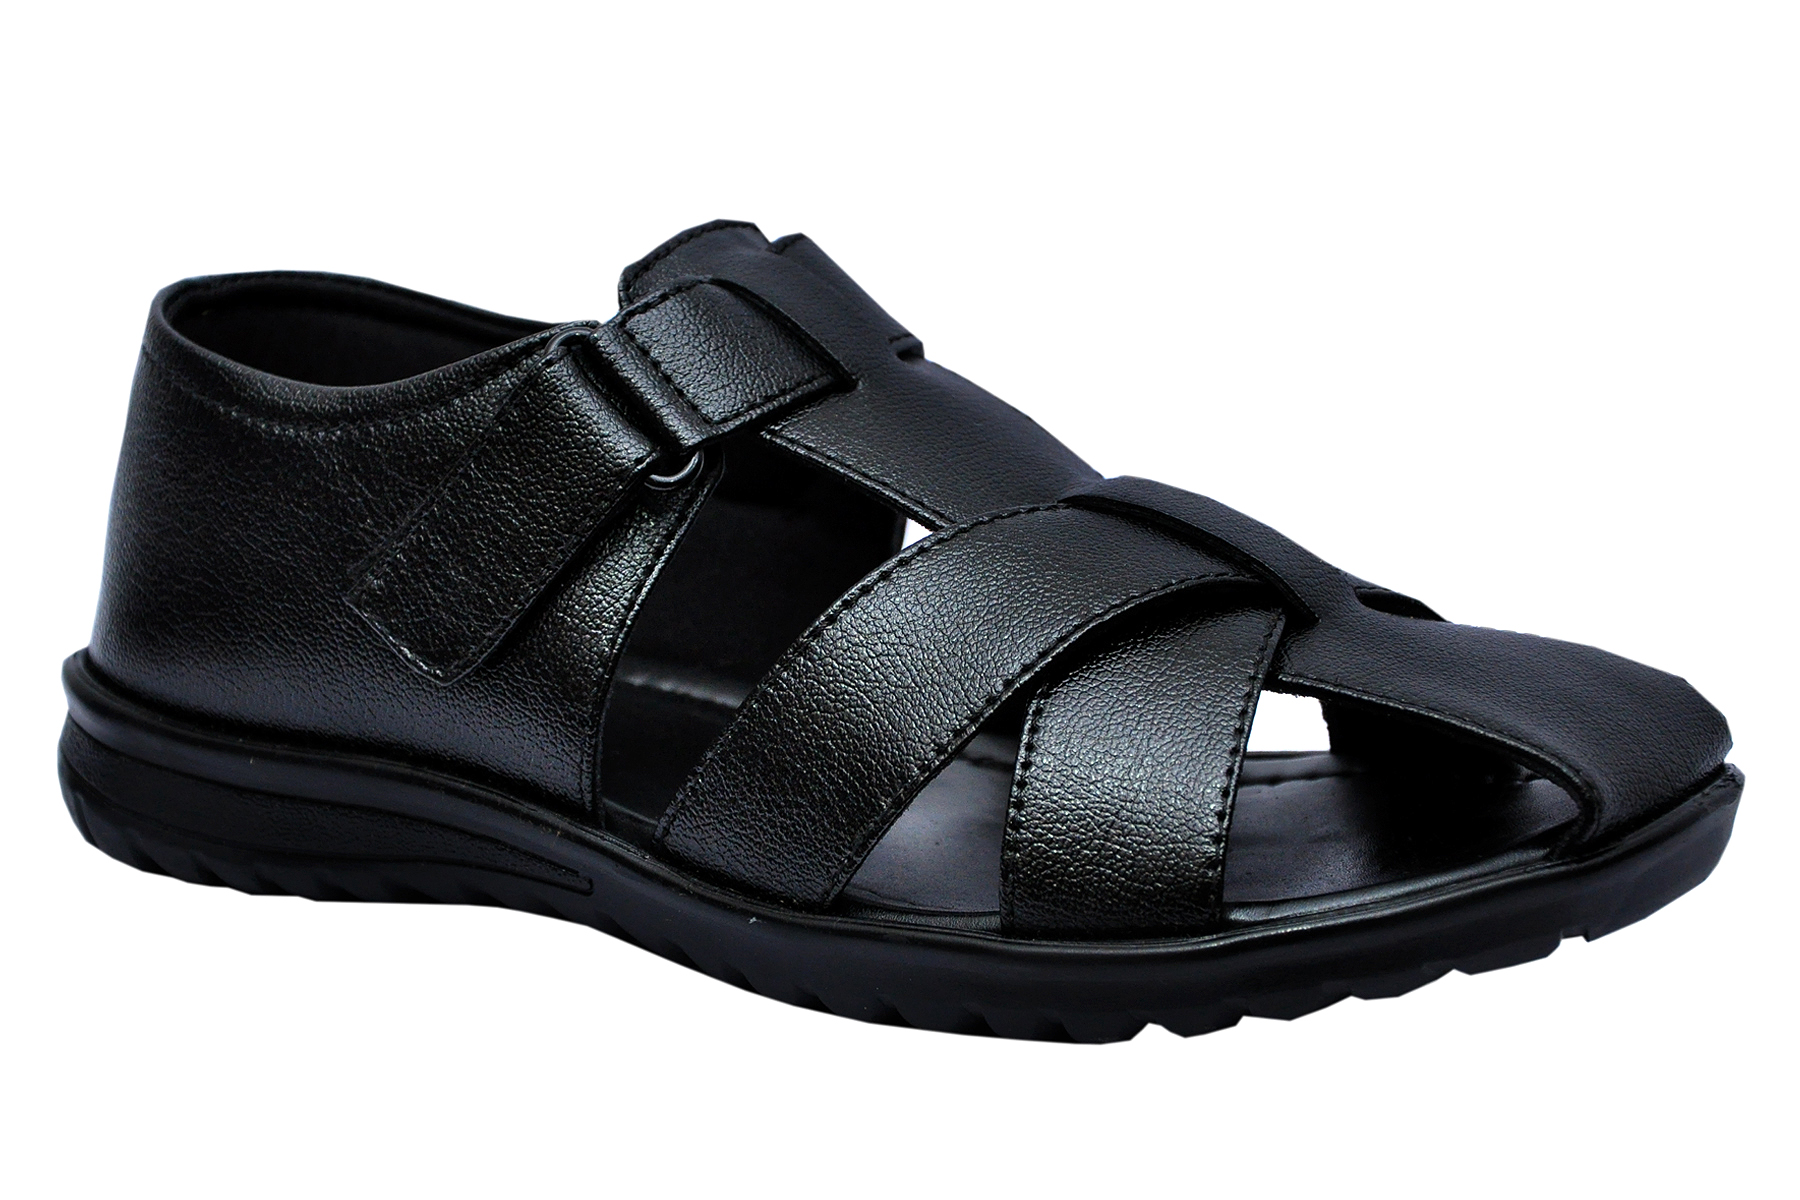 Buy Footlodge Mens Black Velcro Sandals Online @ ₹1249 from ShopClues